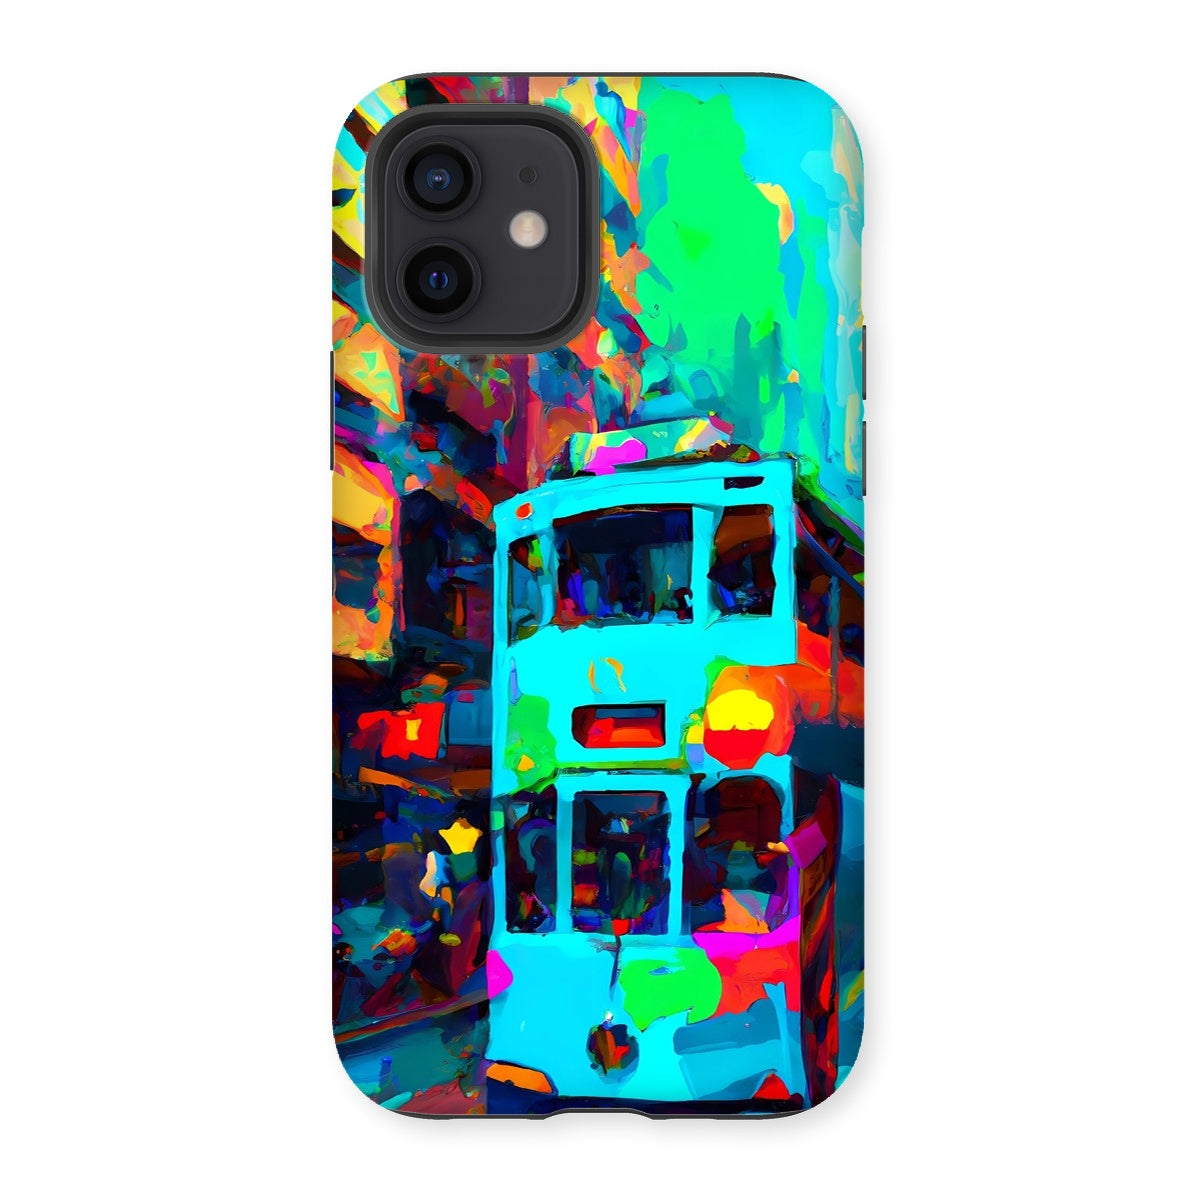 Hong Kong Impressions - Tram Tough Phone Case